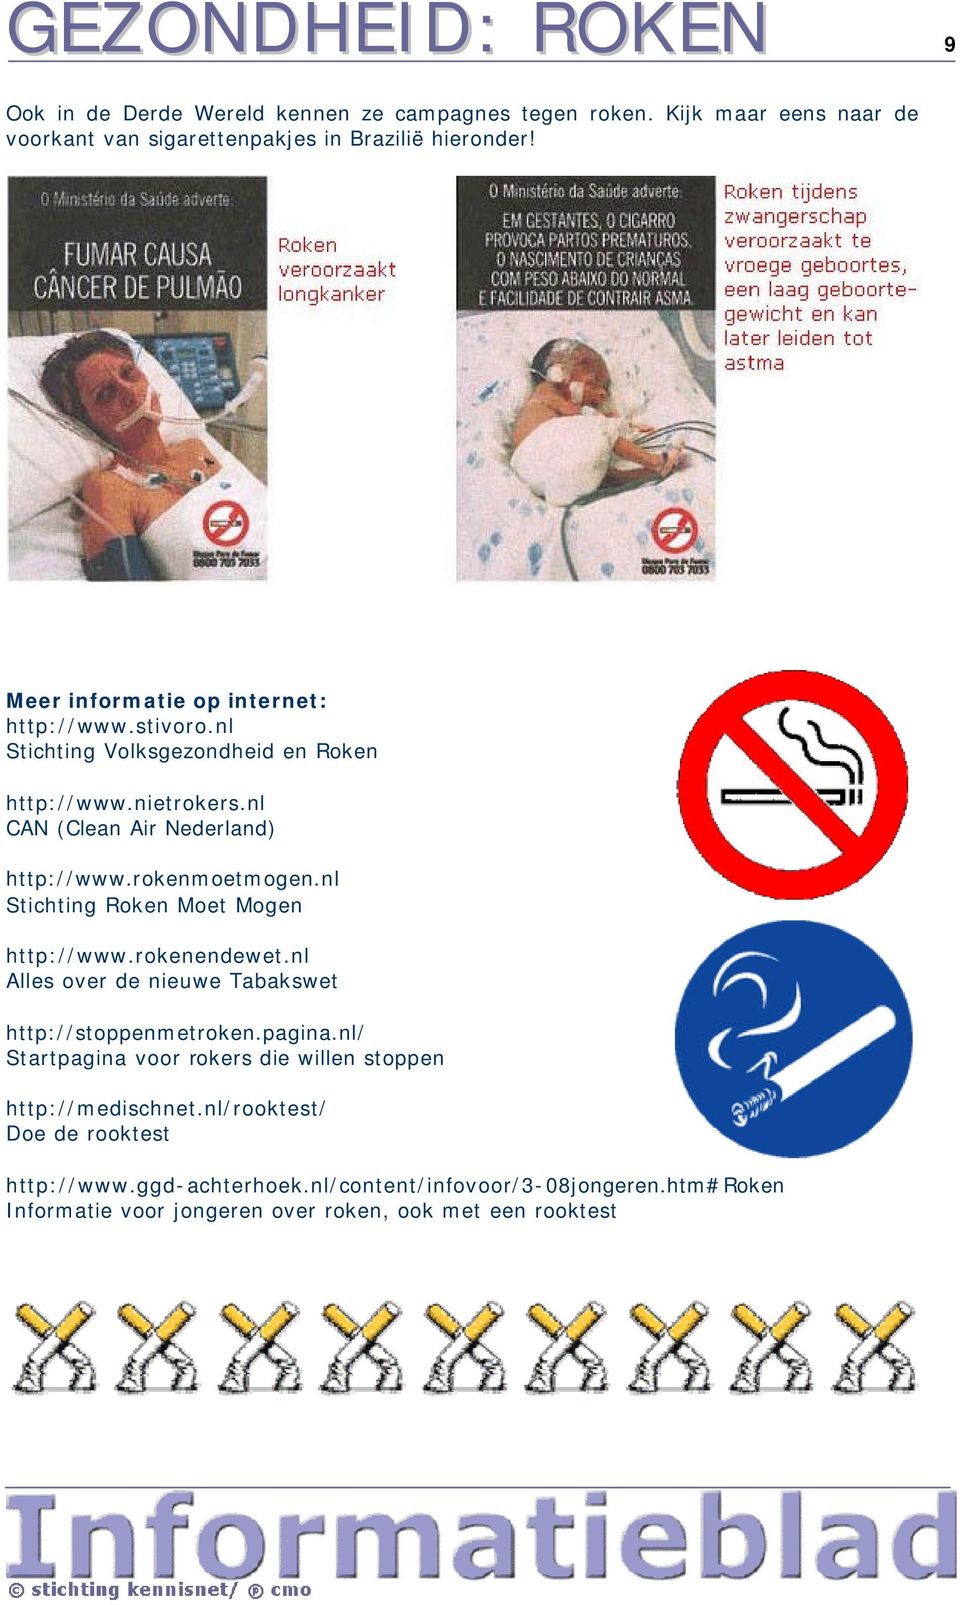 nl Stichting Roken Moet Mogen http://www.rokenendewet.nl Alles over de nieuwe Tabakswet http://stoppenmetroken.pagina.